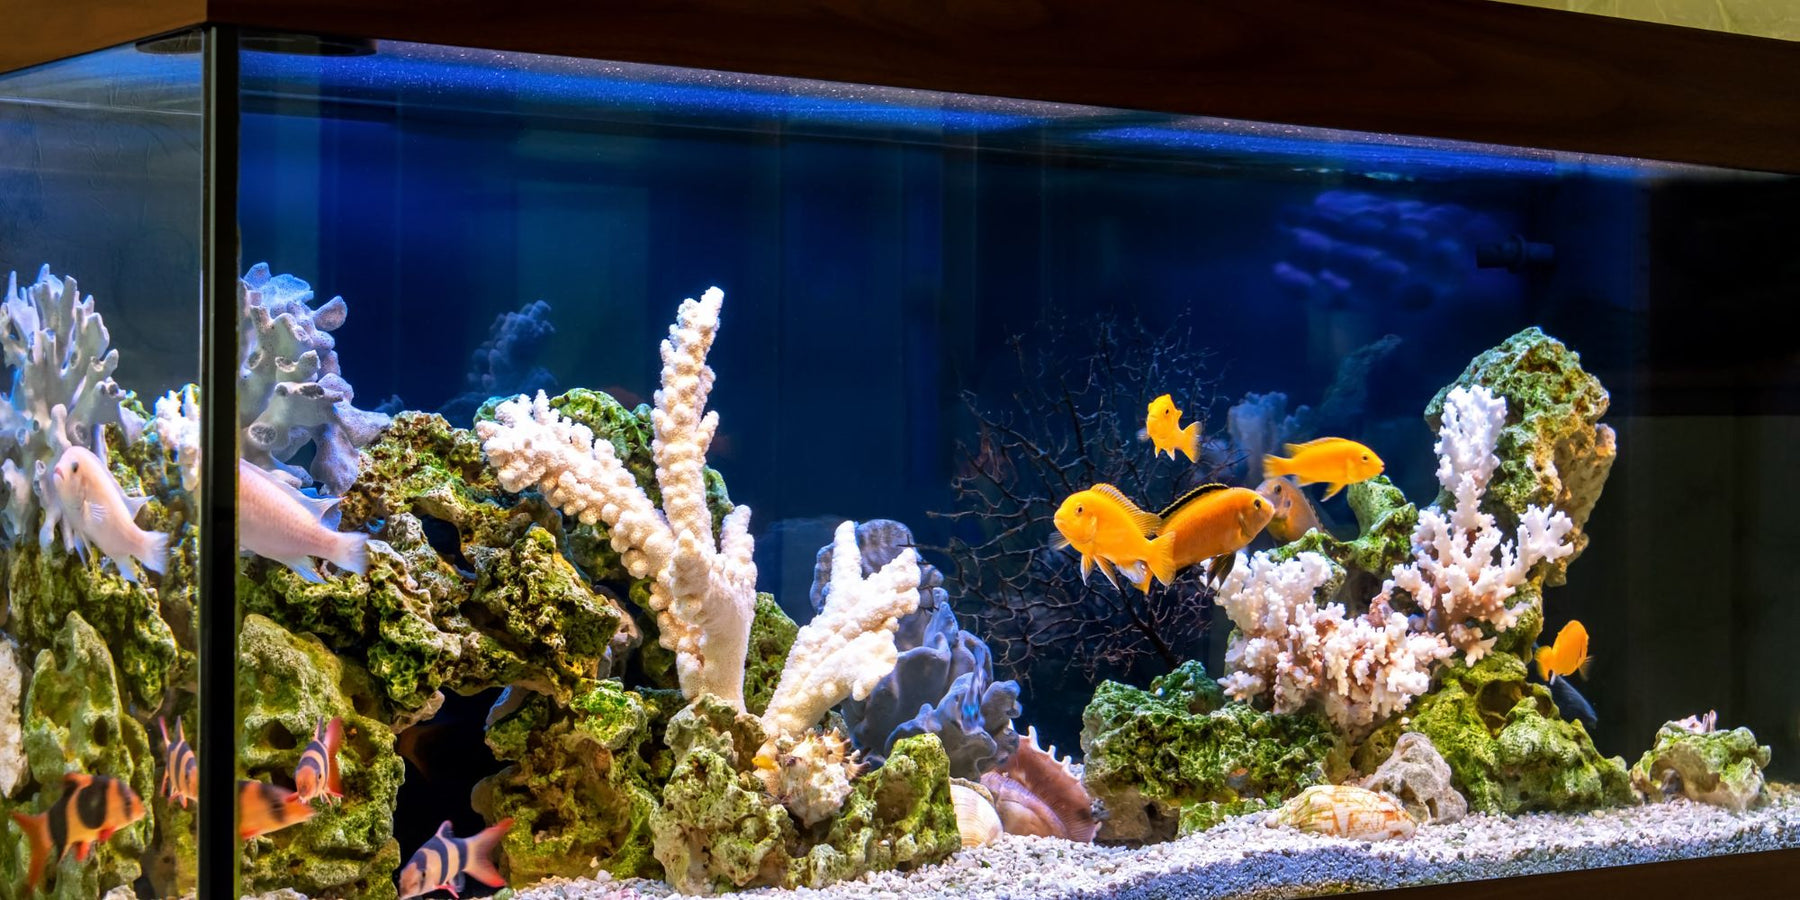 zoetwater vs zoutwater aquariums